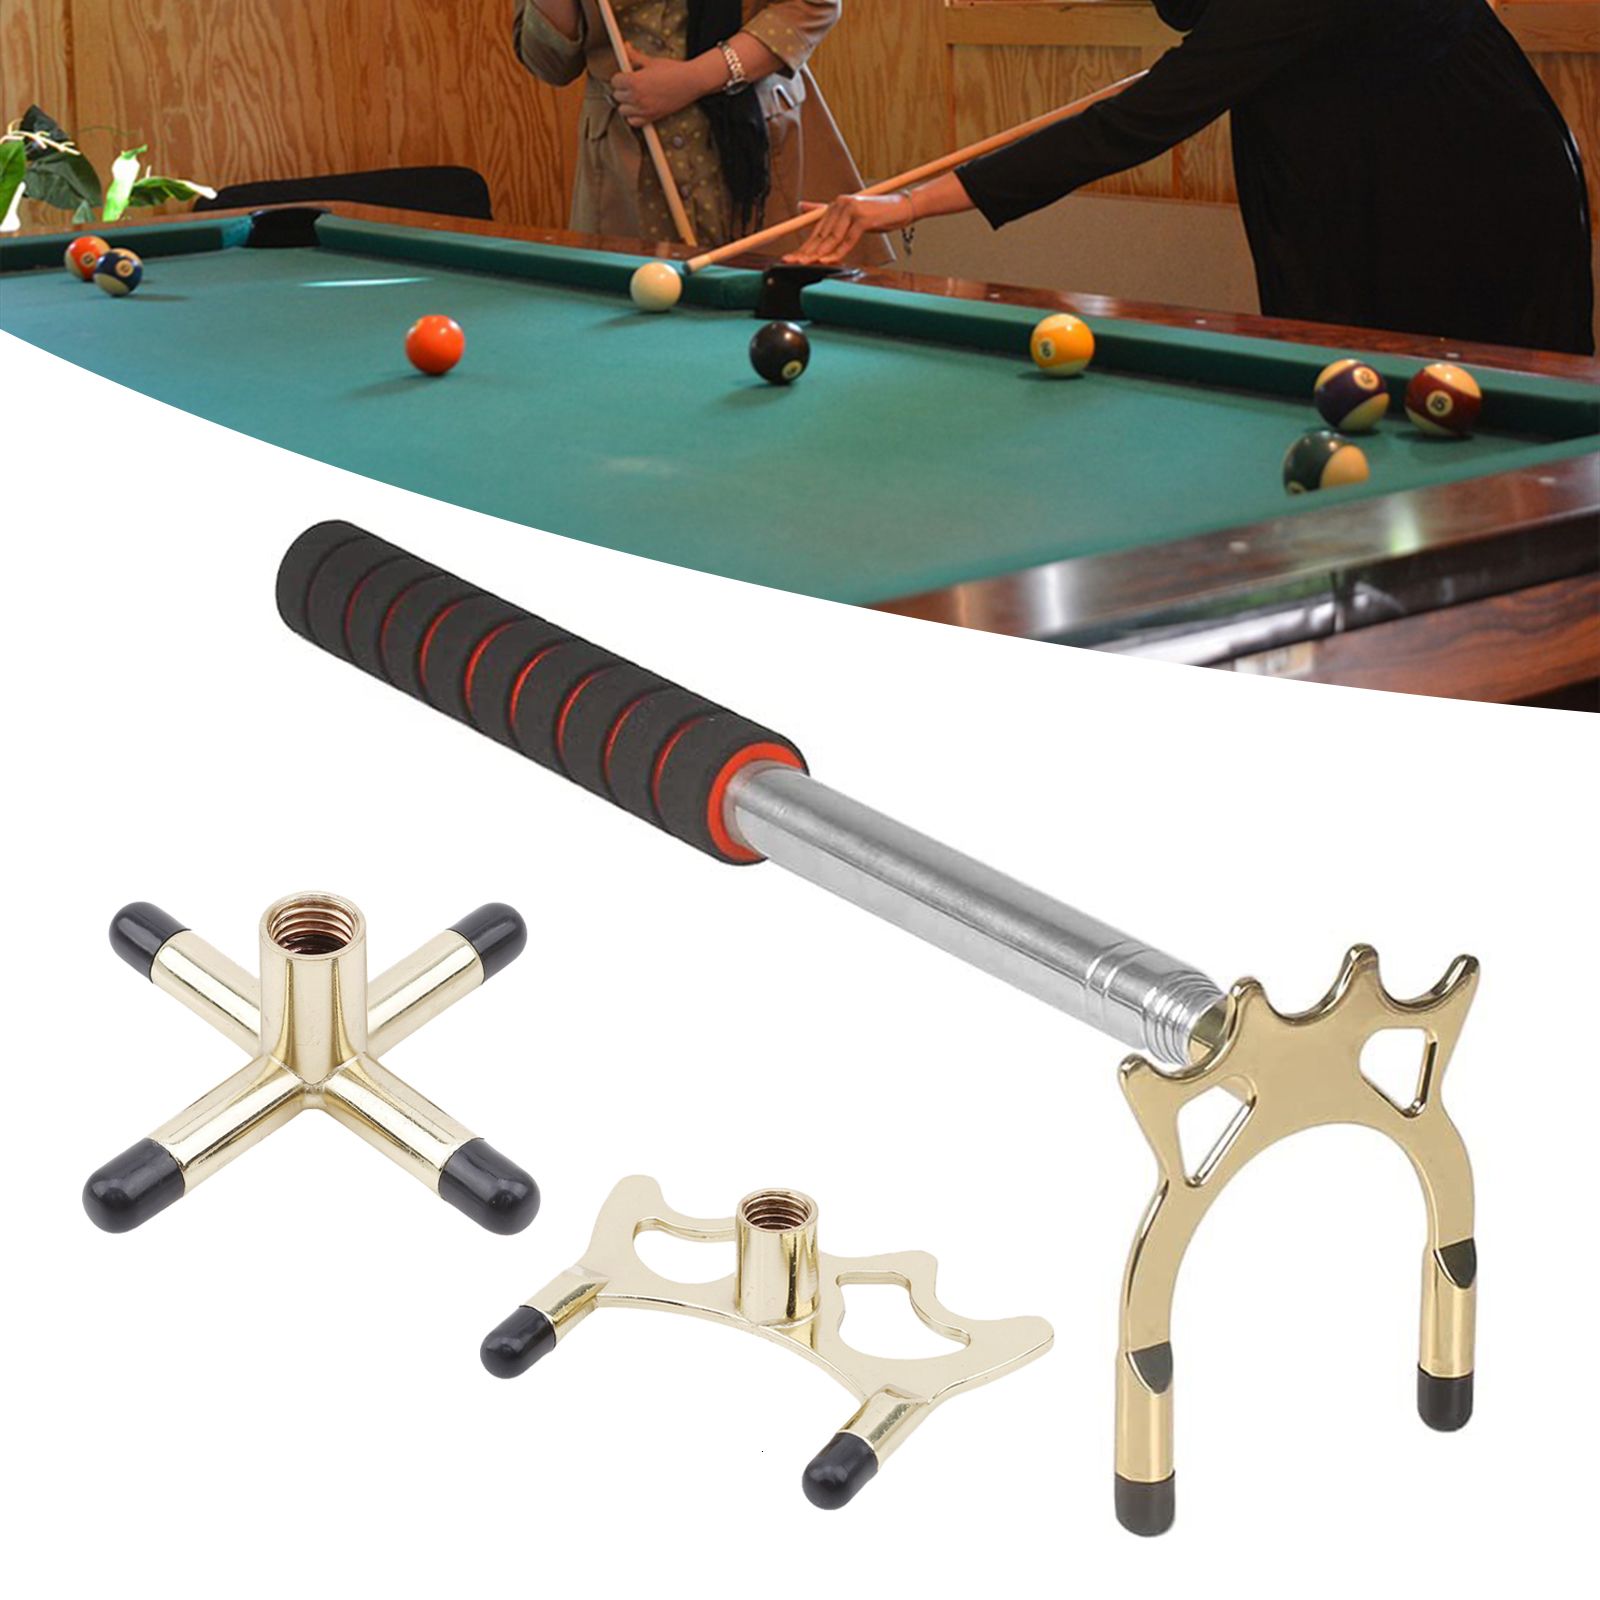 Cues Retractable S Cue Rack Bridge Head Antlers Rod Holder Snooker Pool Plastic Staghorn Shape Billiard Accessories 230206 From Long07, $11.2 DHgate